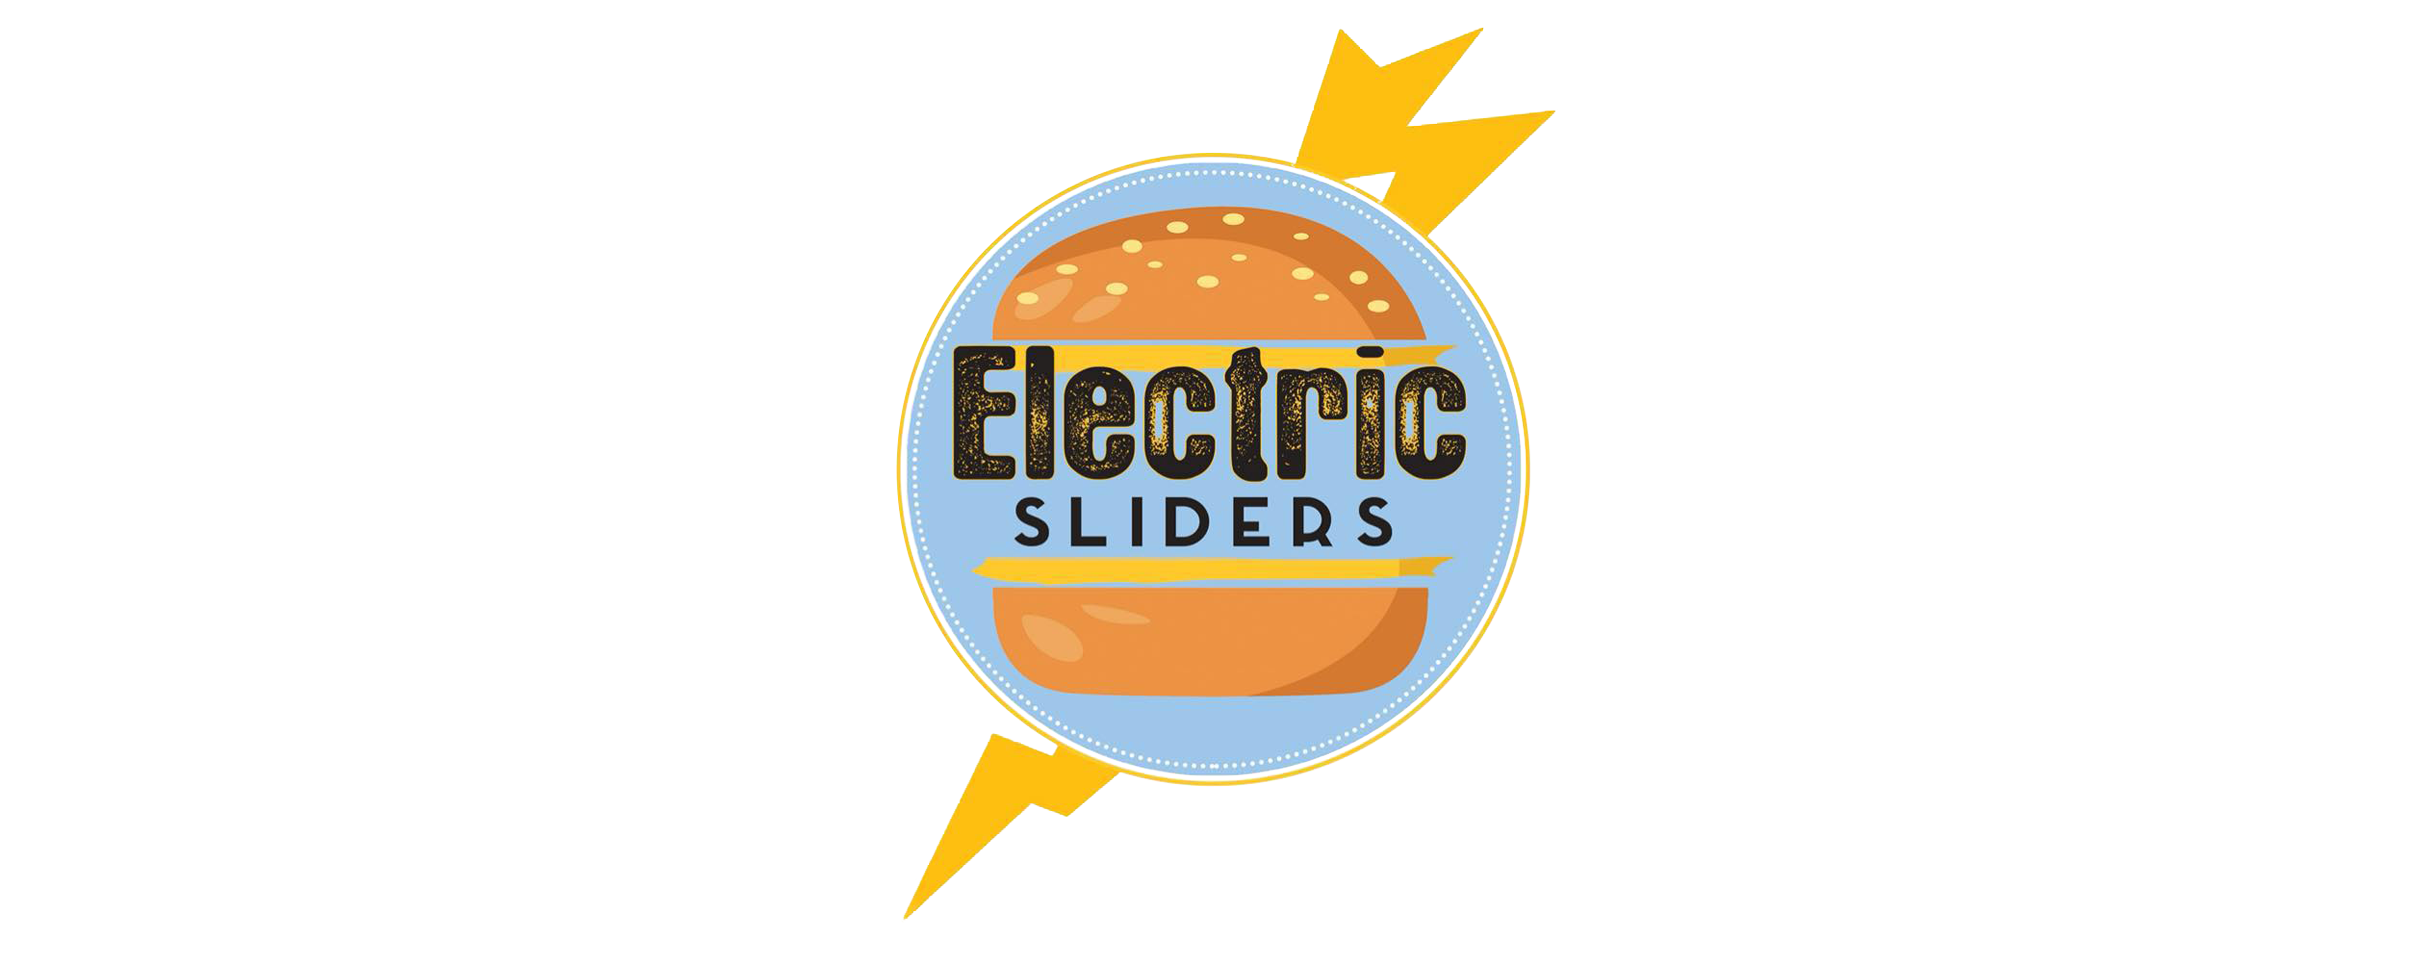 Electric Sliders